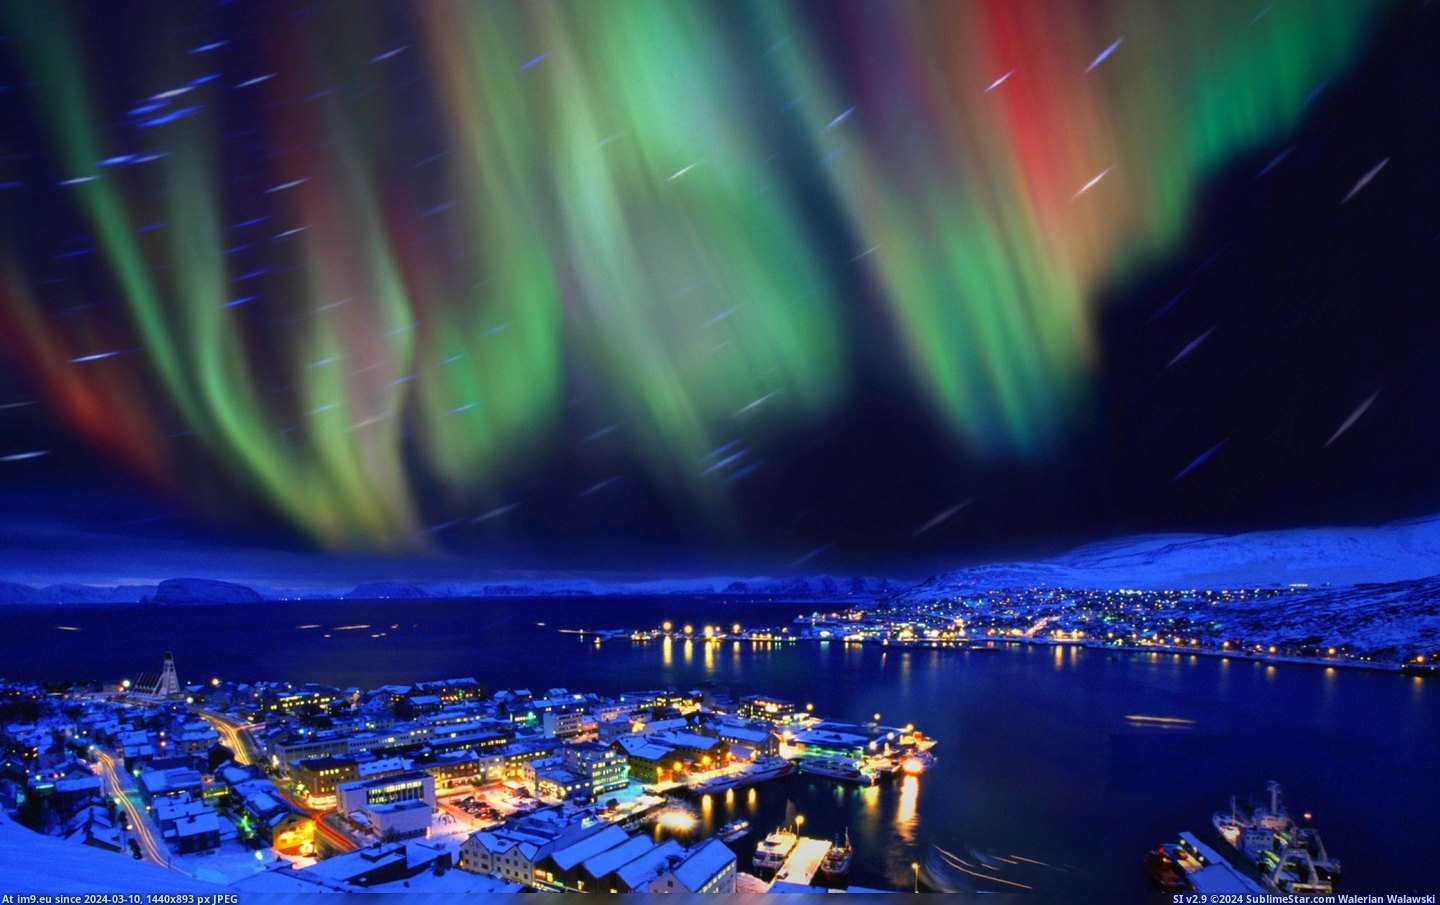 #Lights #Northern #Norway [Pics] Northern Lights Norway Pic. (Bild von album My r/PICS favs))